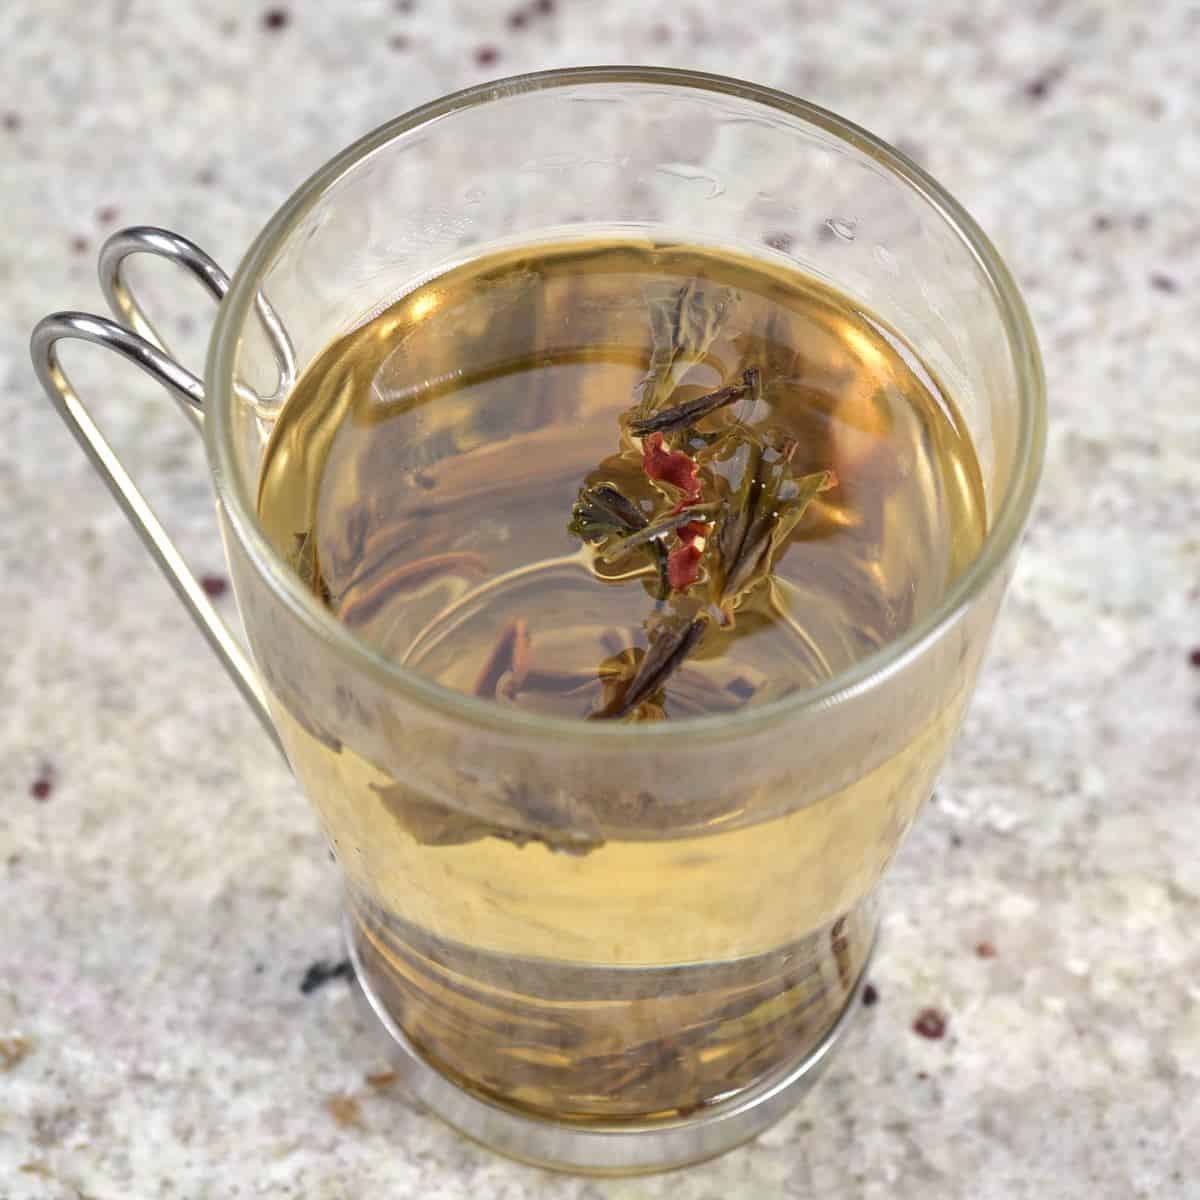 Green tea in a glass